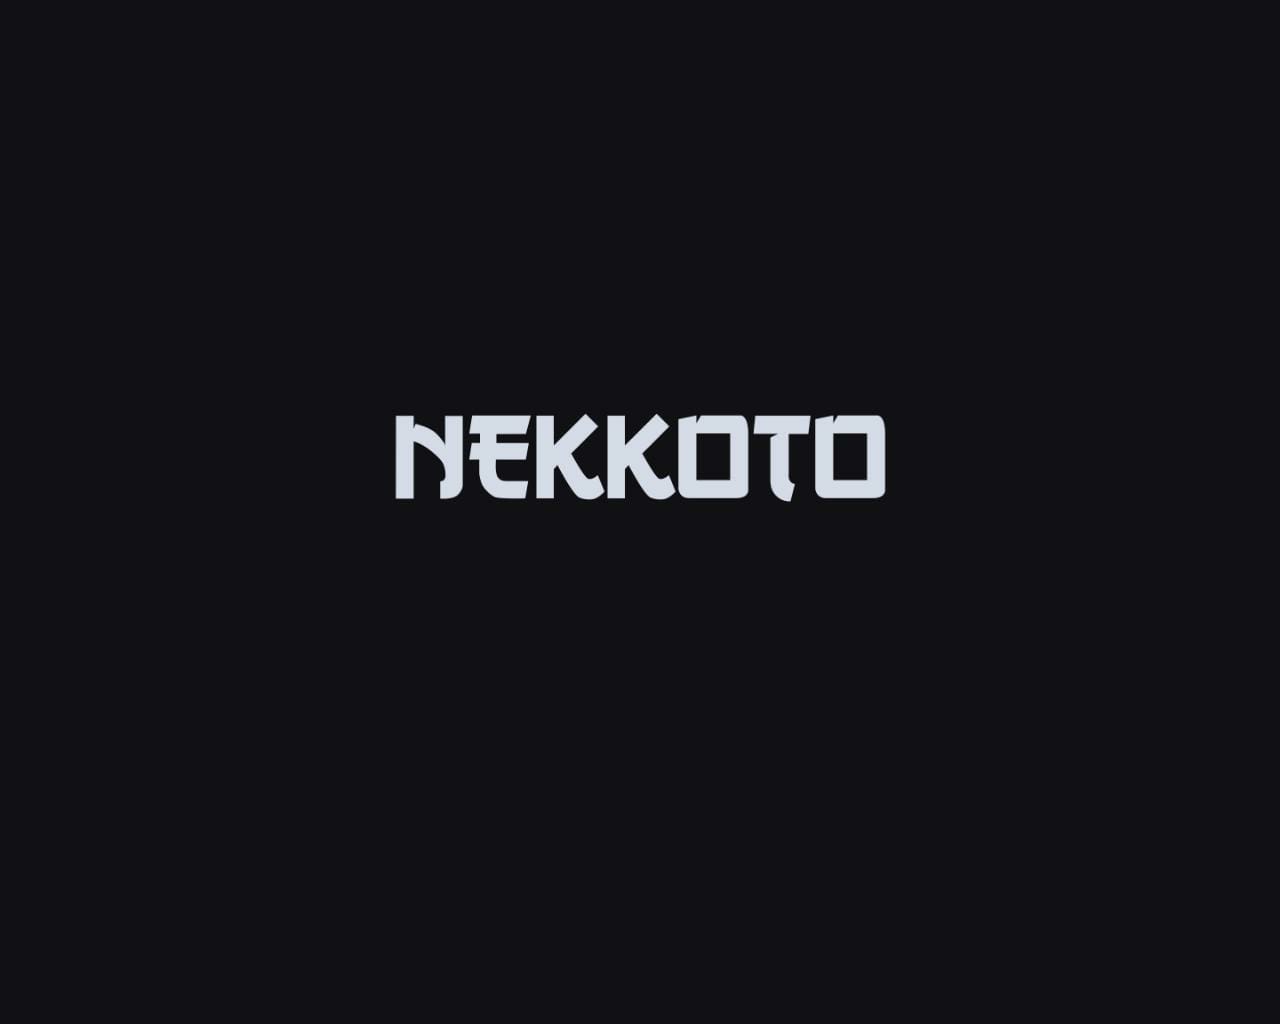 Nekkoto APK Free Download (Ani-Ko Invite Codes FREE)